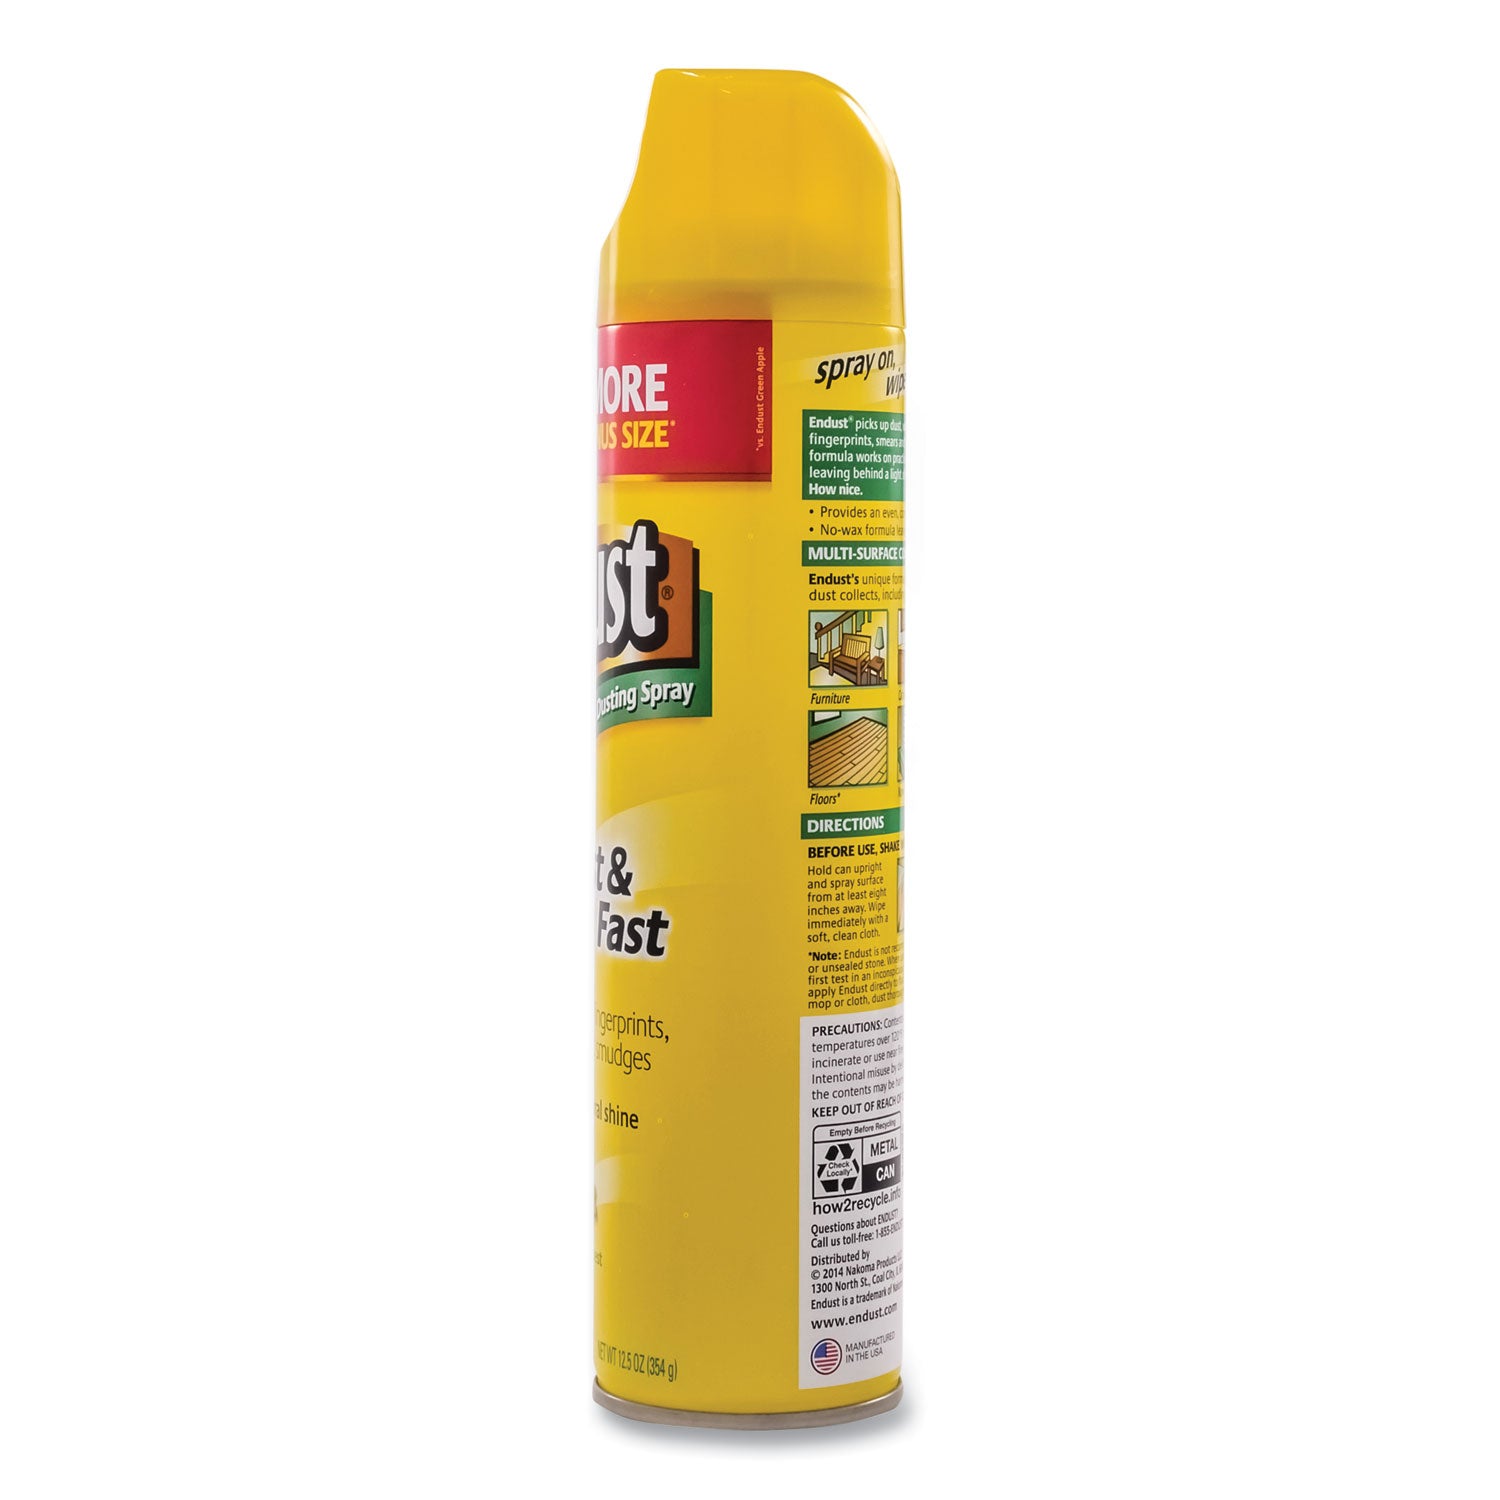 endust-multi-surface-dusting-and-cleaning-spray-lemon-zest-125-oz-aerosol-spray_dvocb508171ea - 4